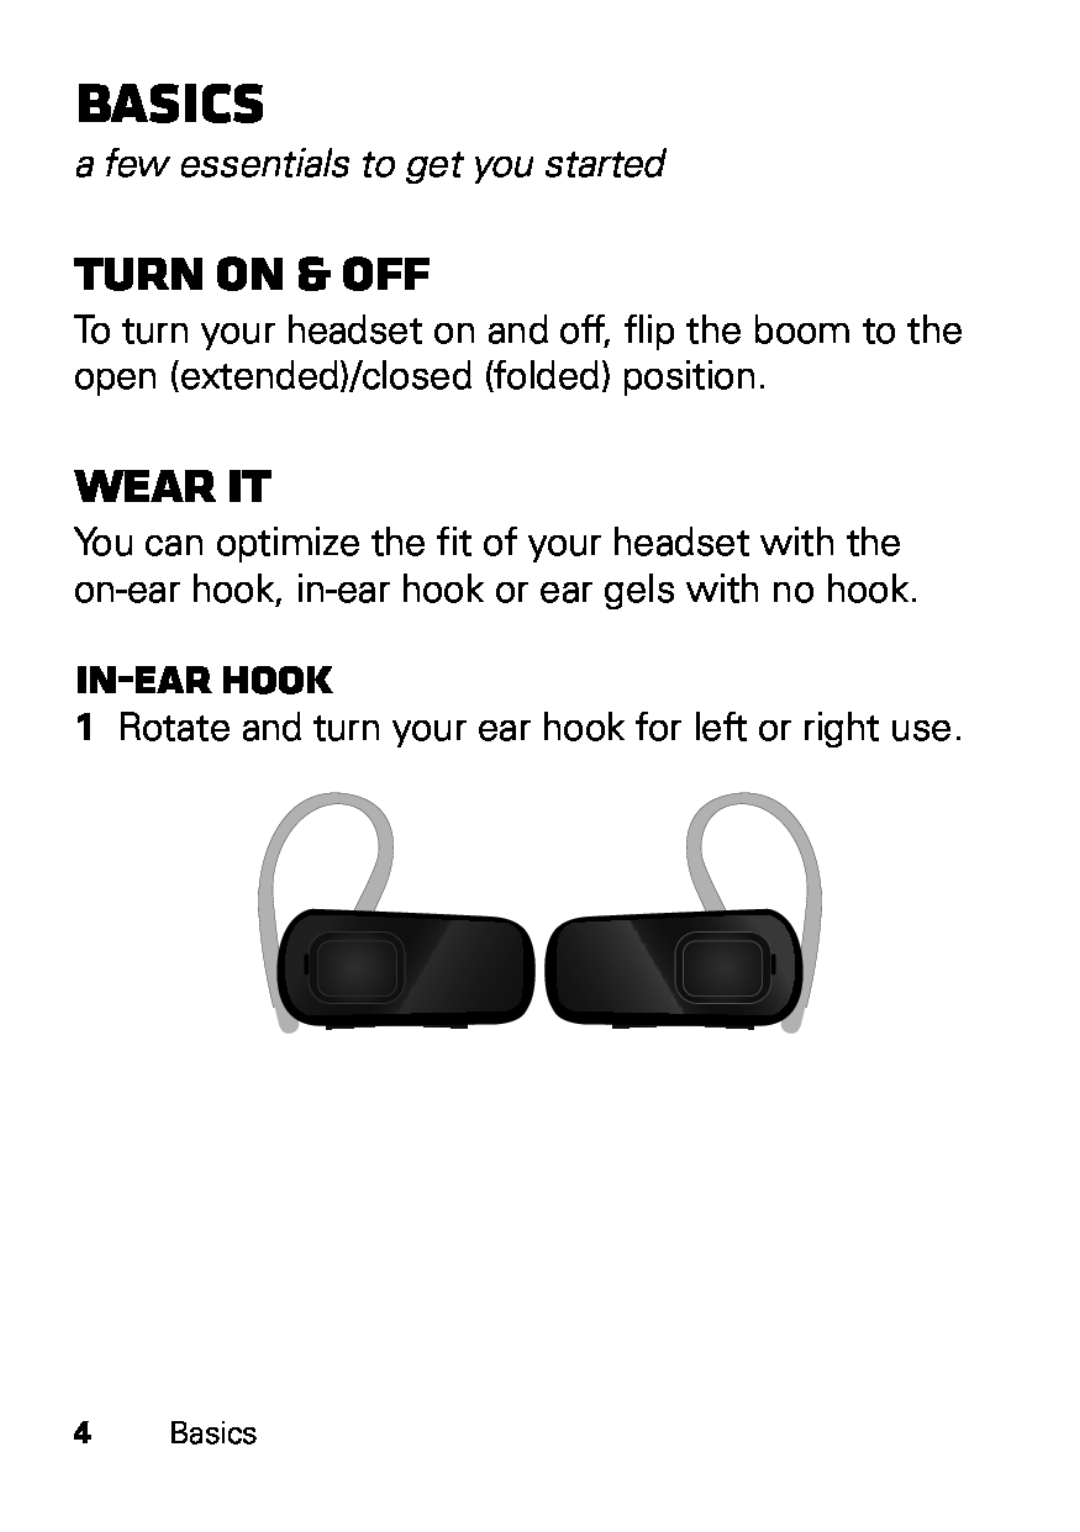 Motorola HX550 manual Basics, Turn on & off, Wear it, in-earhook, a few essentials to get you started 